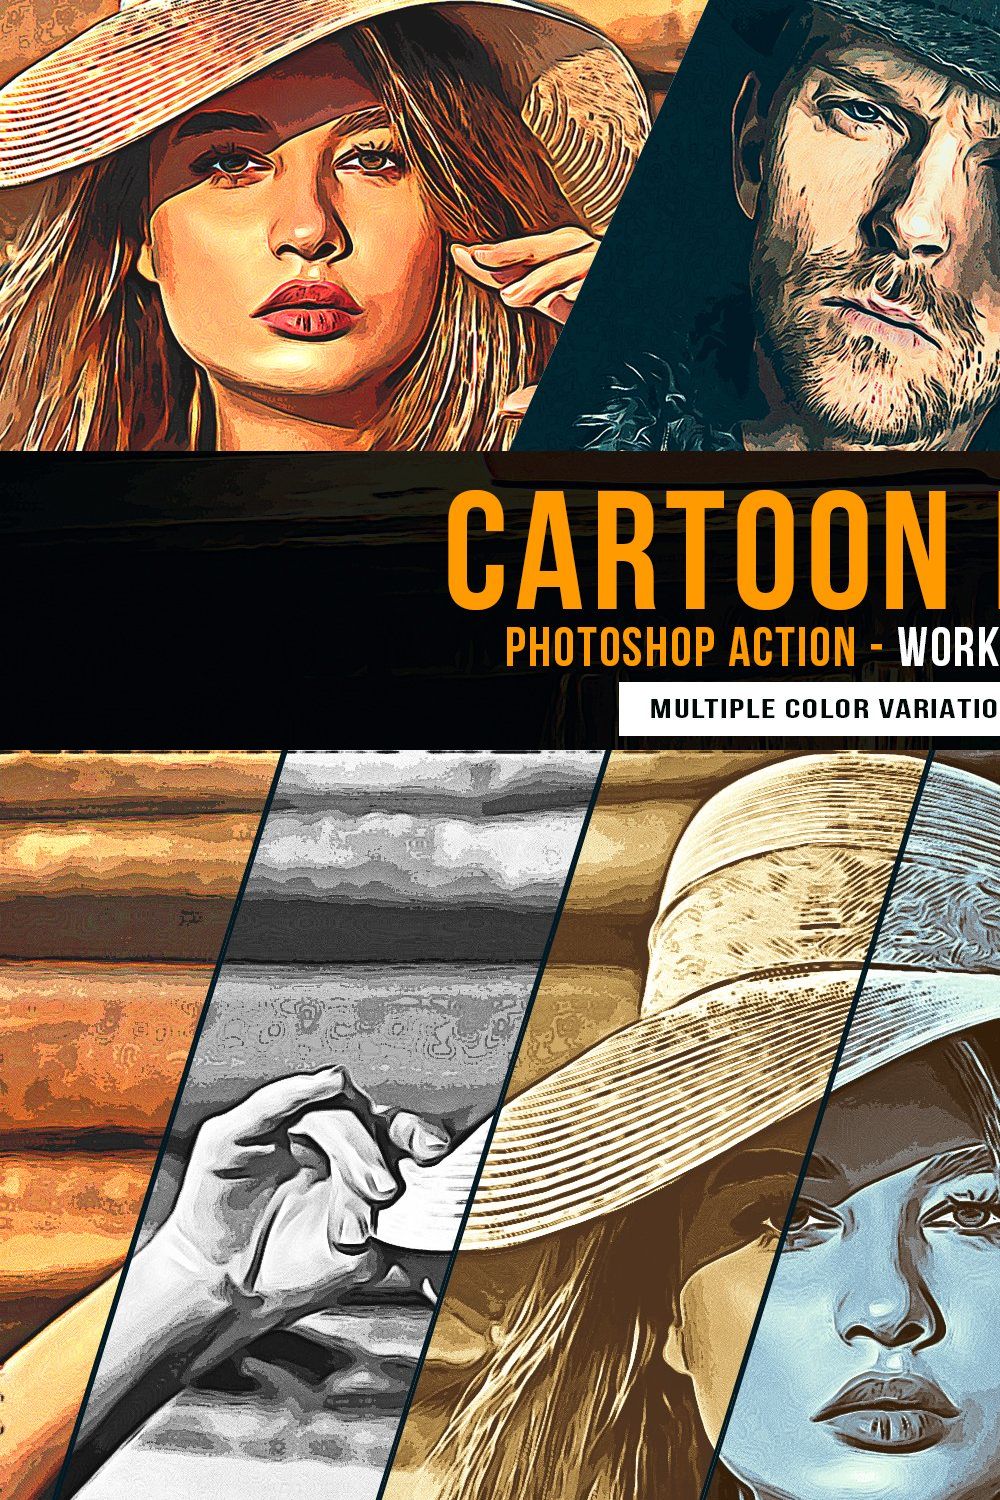 Cartoon Maker Photoshop Action pinterest preview image.